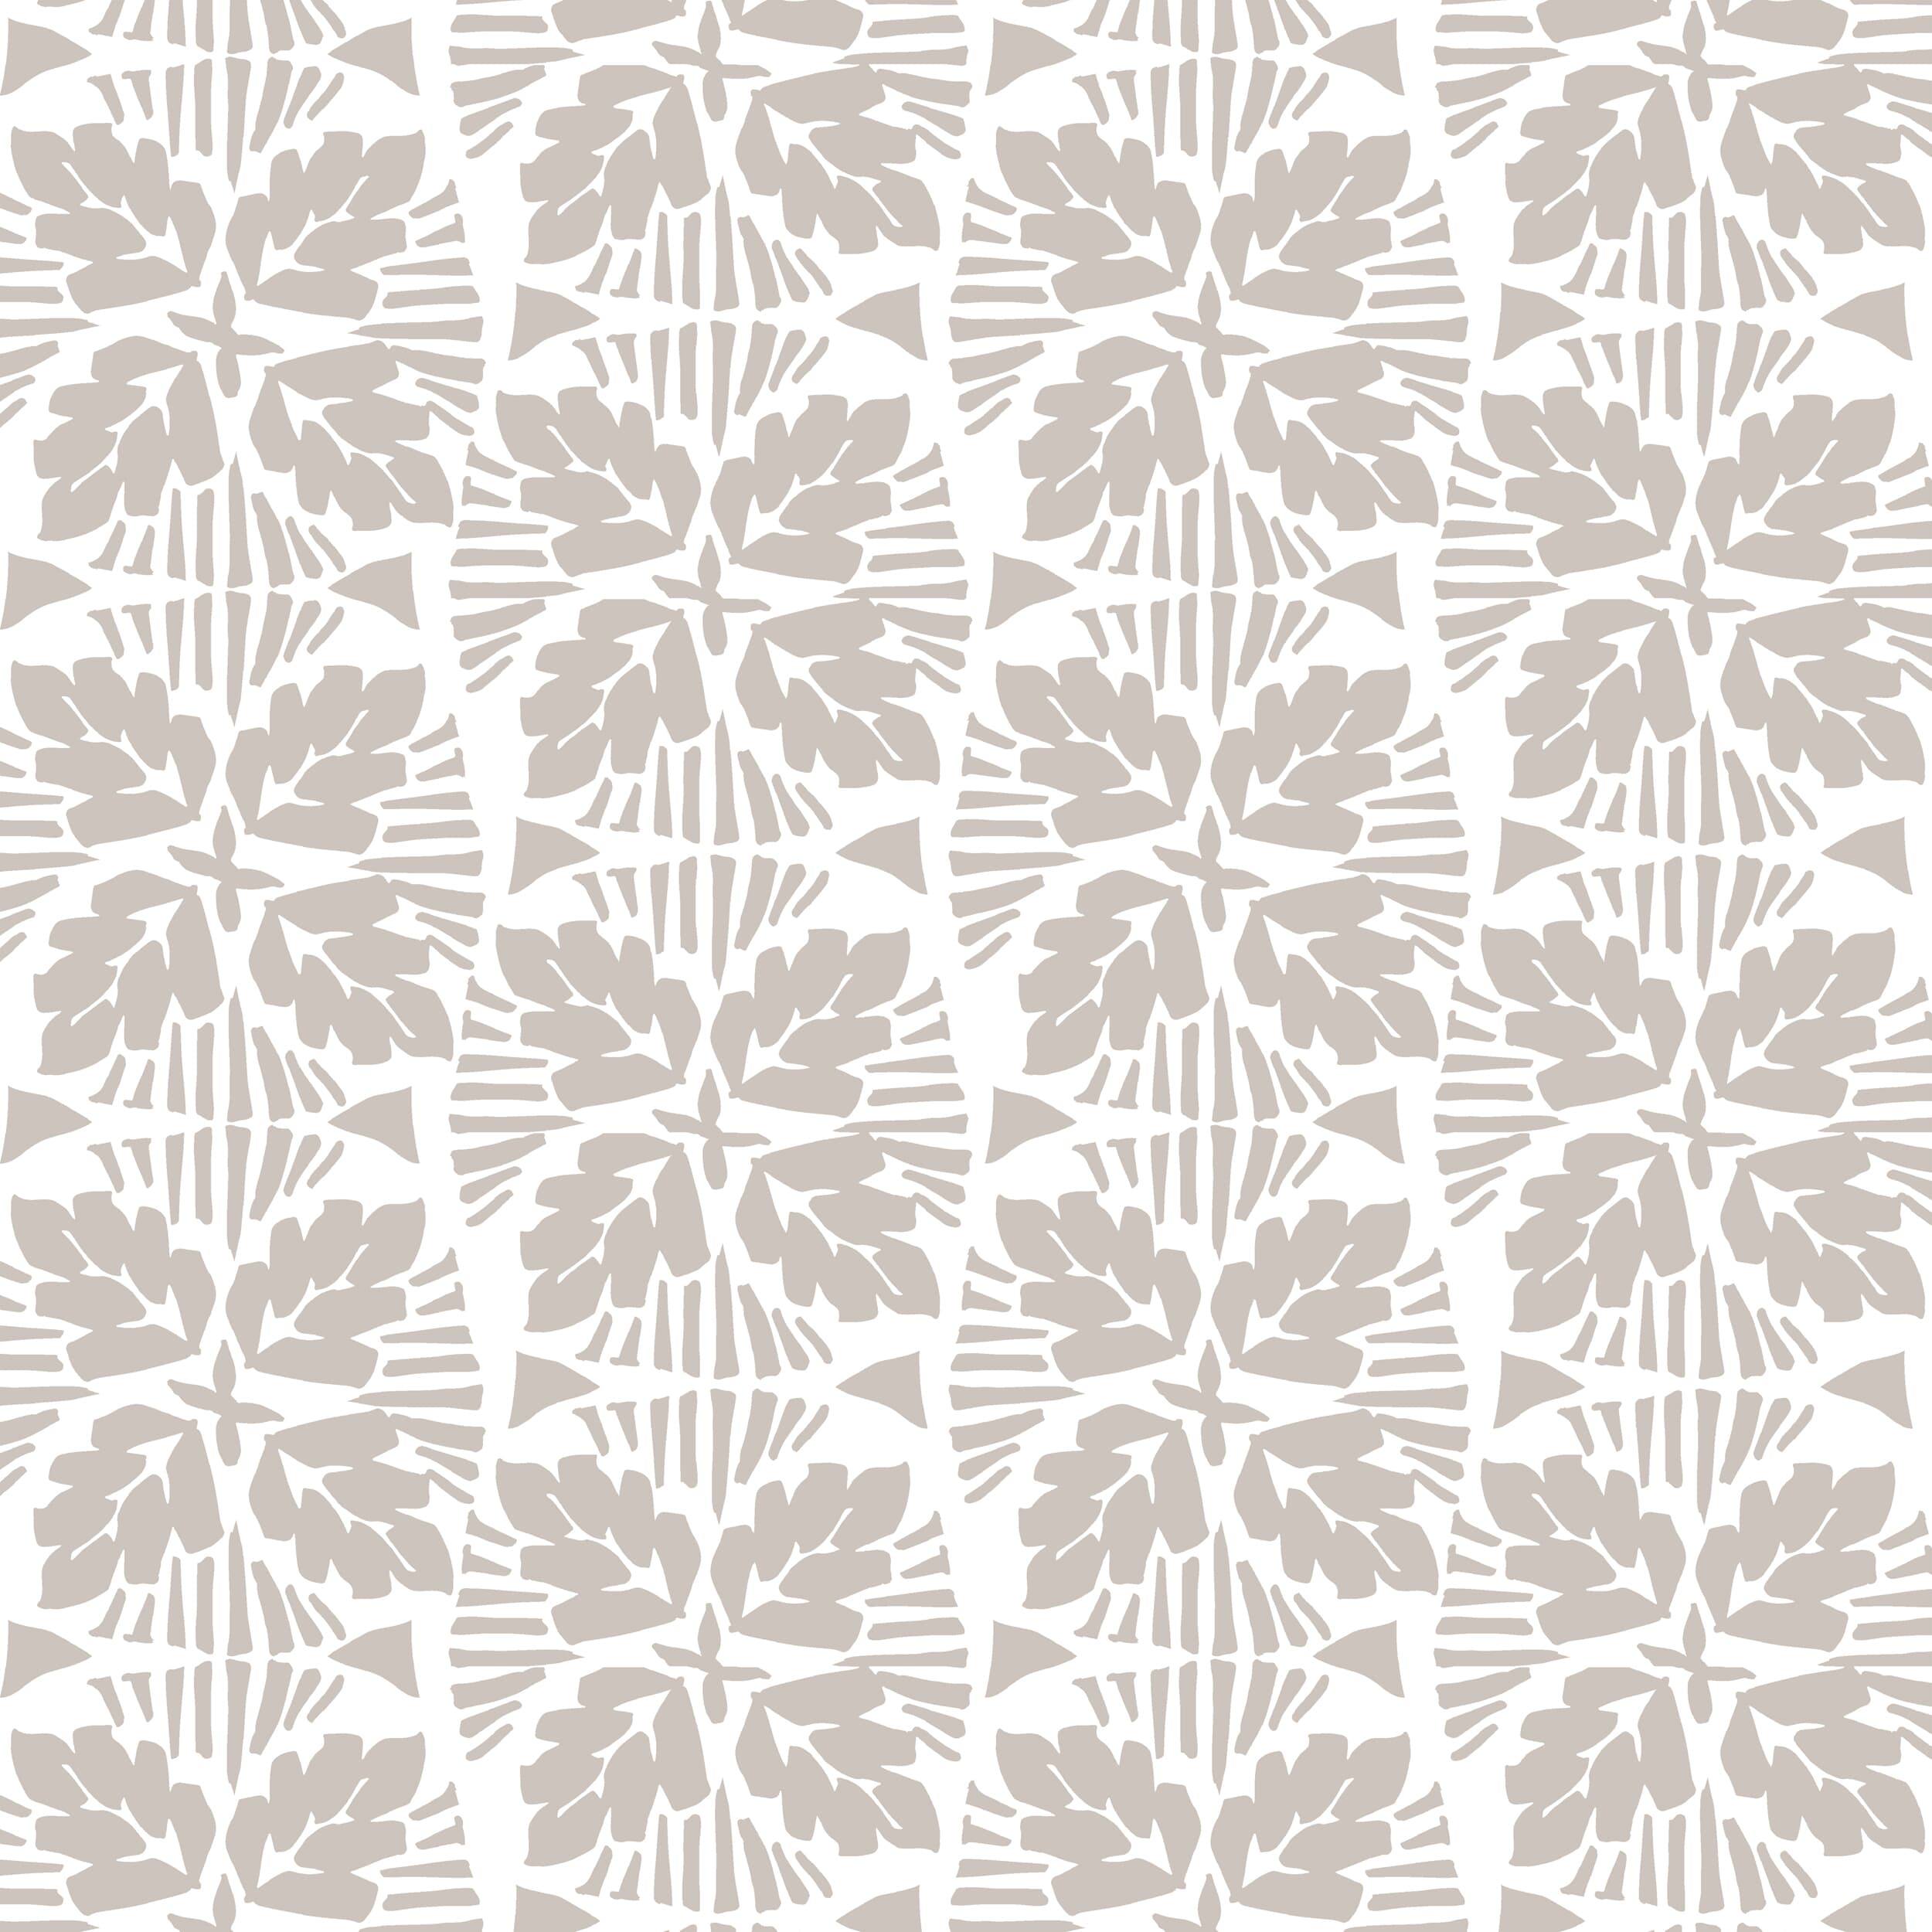 W02vl-4 Keylargo Grey Wallpaper by Stout Fabric